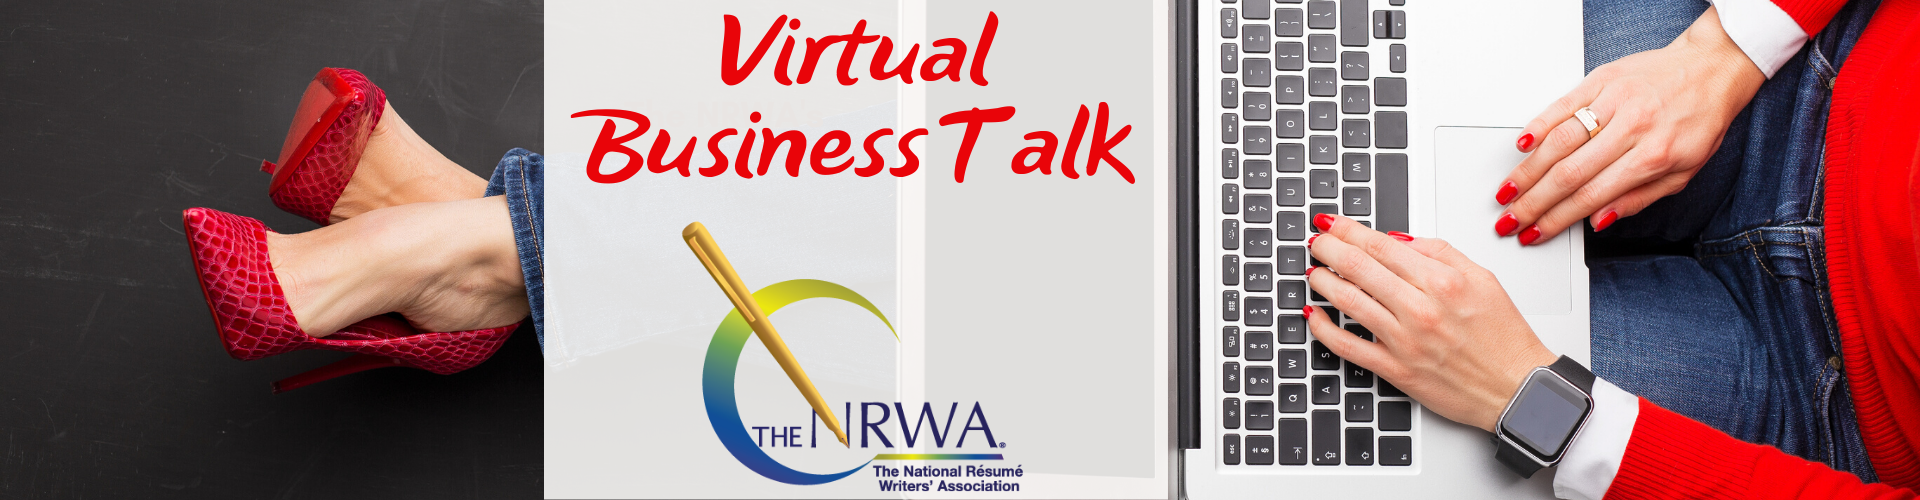 Virtual Business Talk